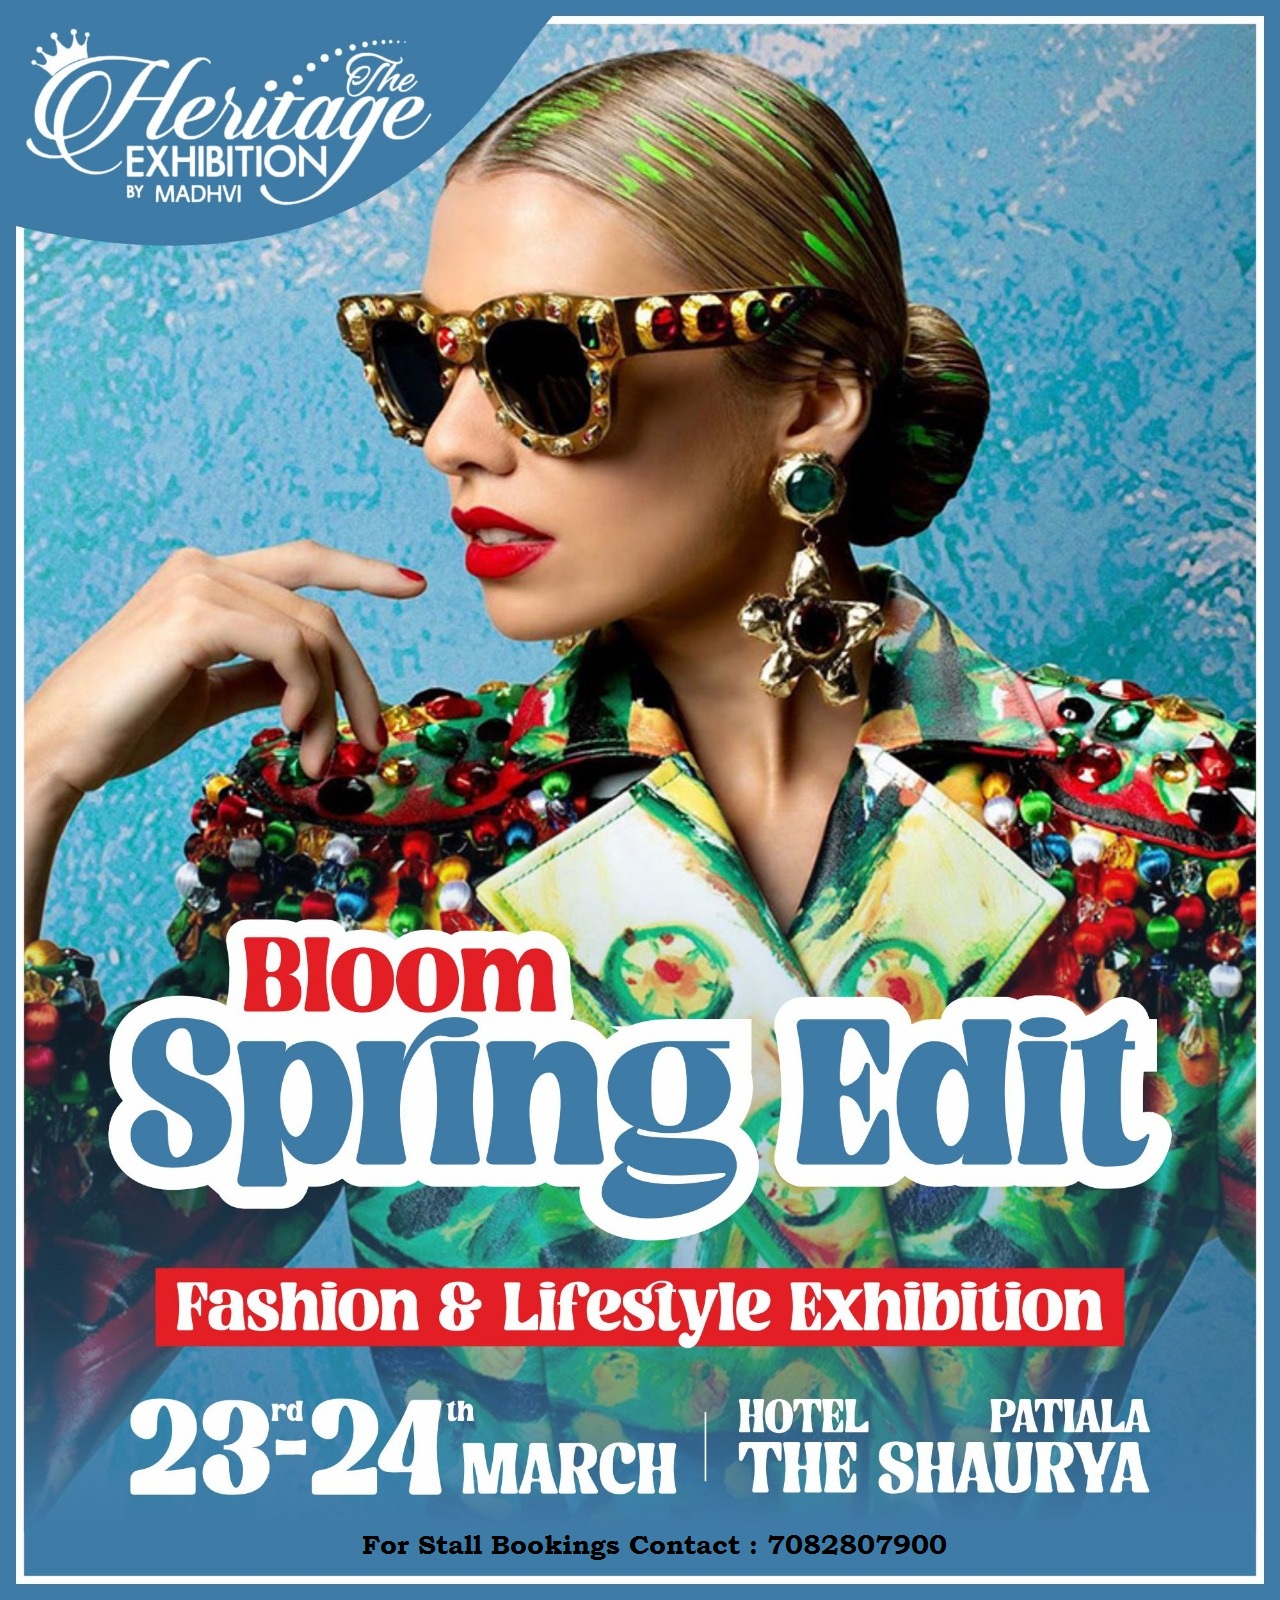 SUMMER SOIREE - Fashion & Lifestyle Exhibition